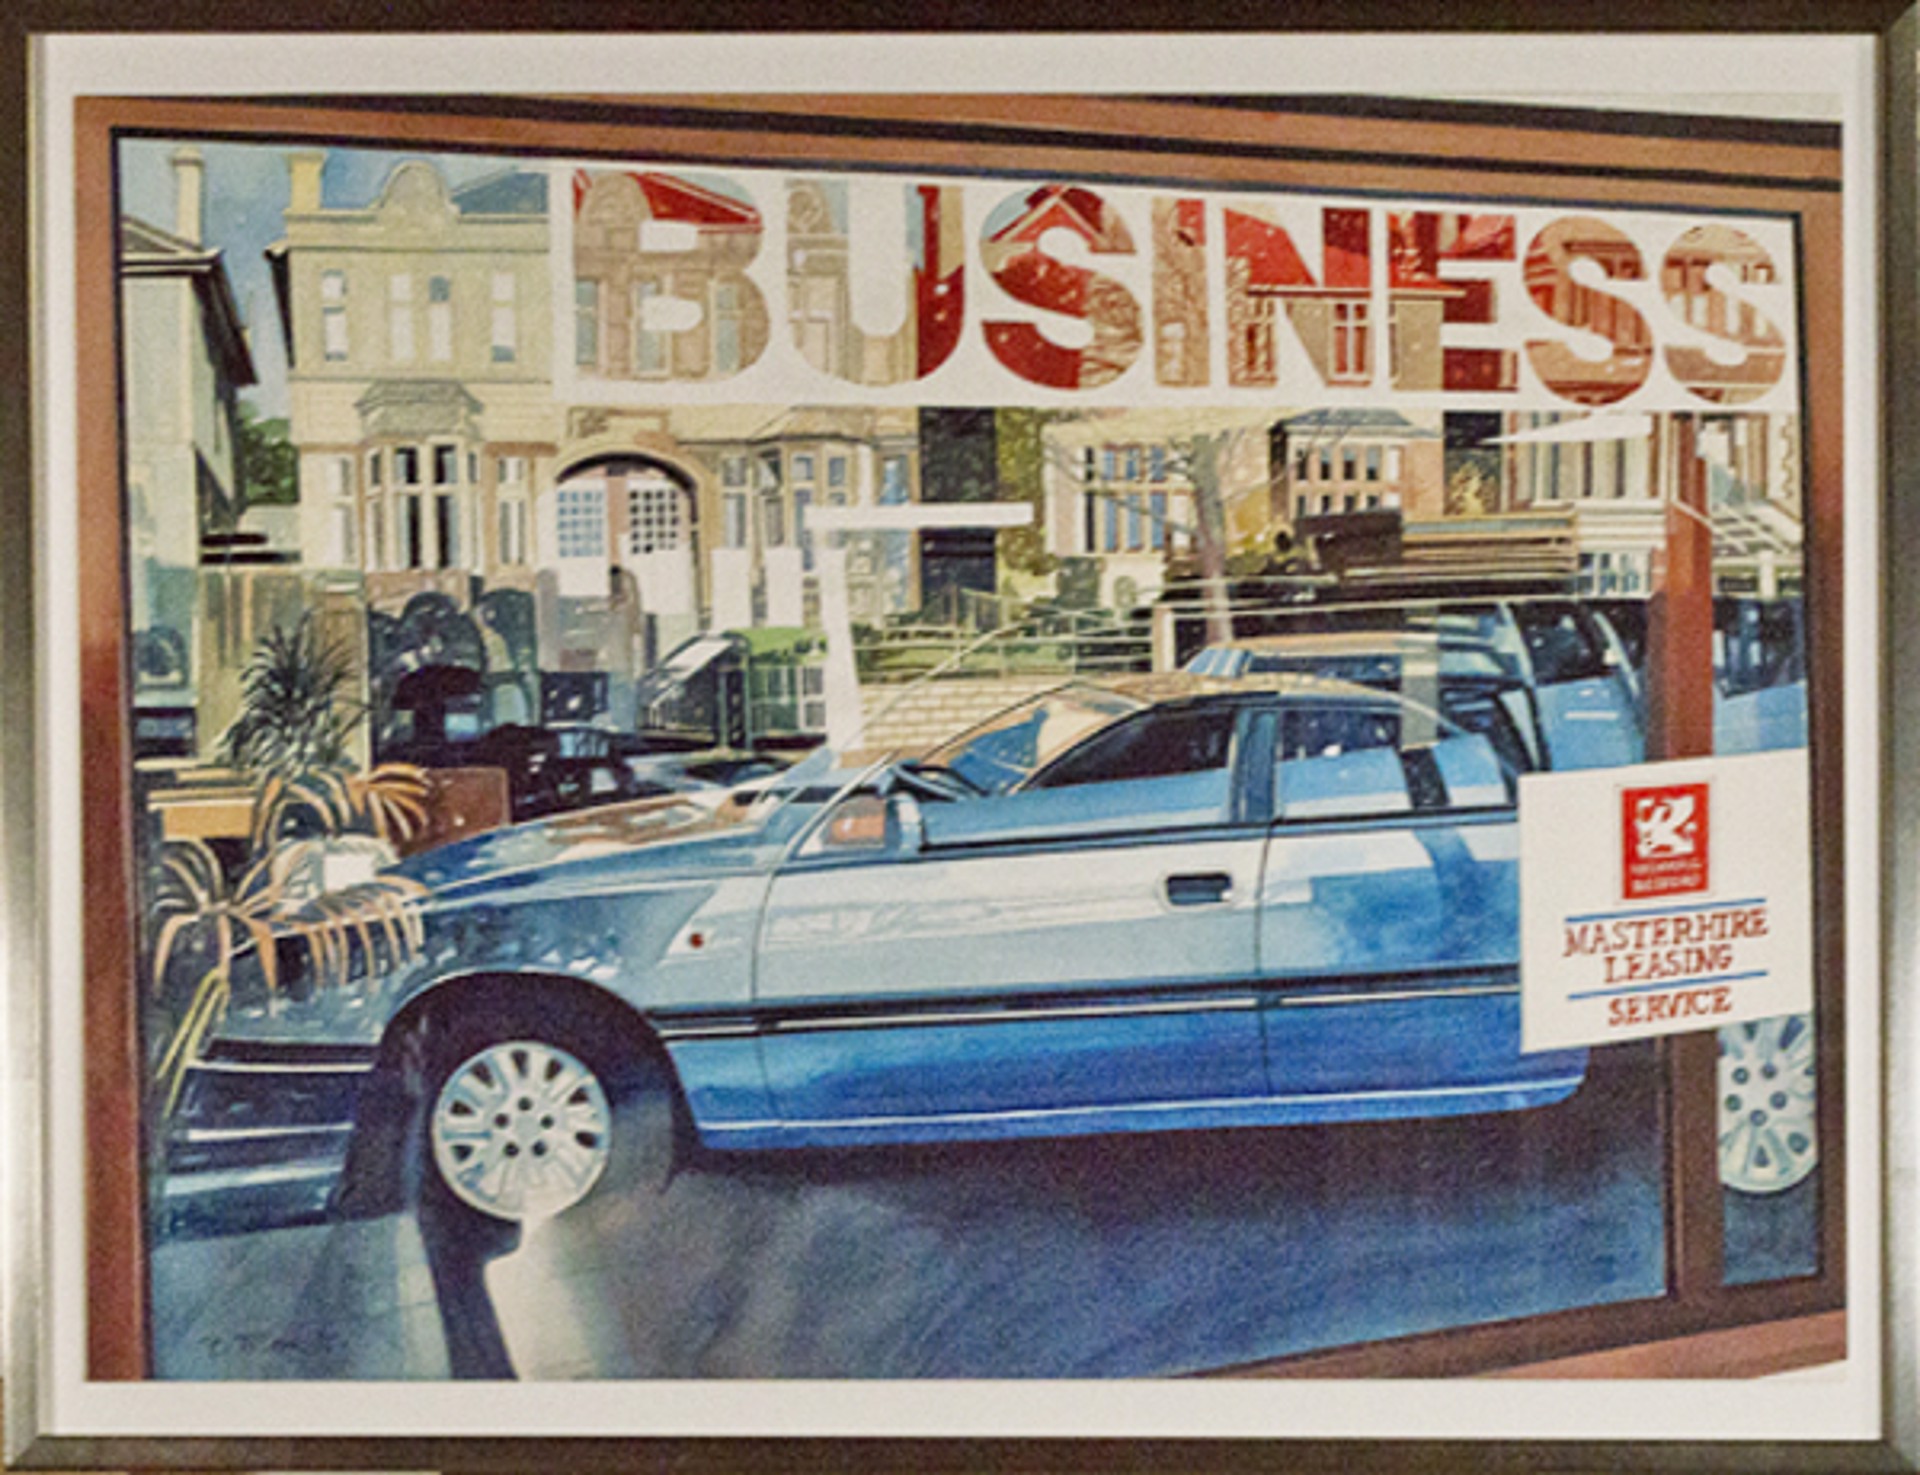 Car Dealership, Bath U.K. by Bruce McCombs